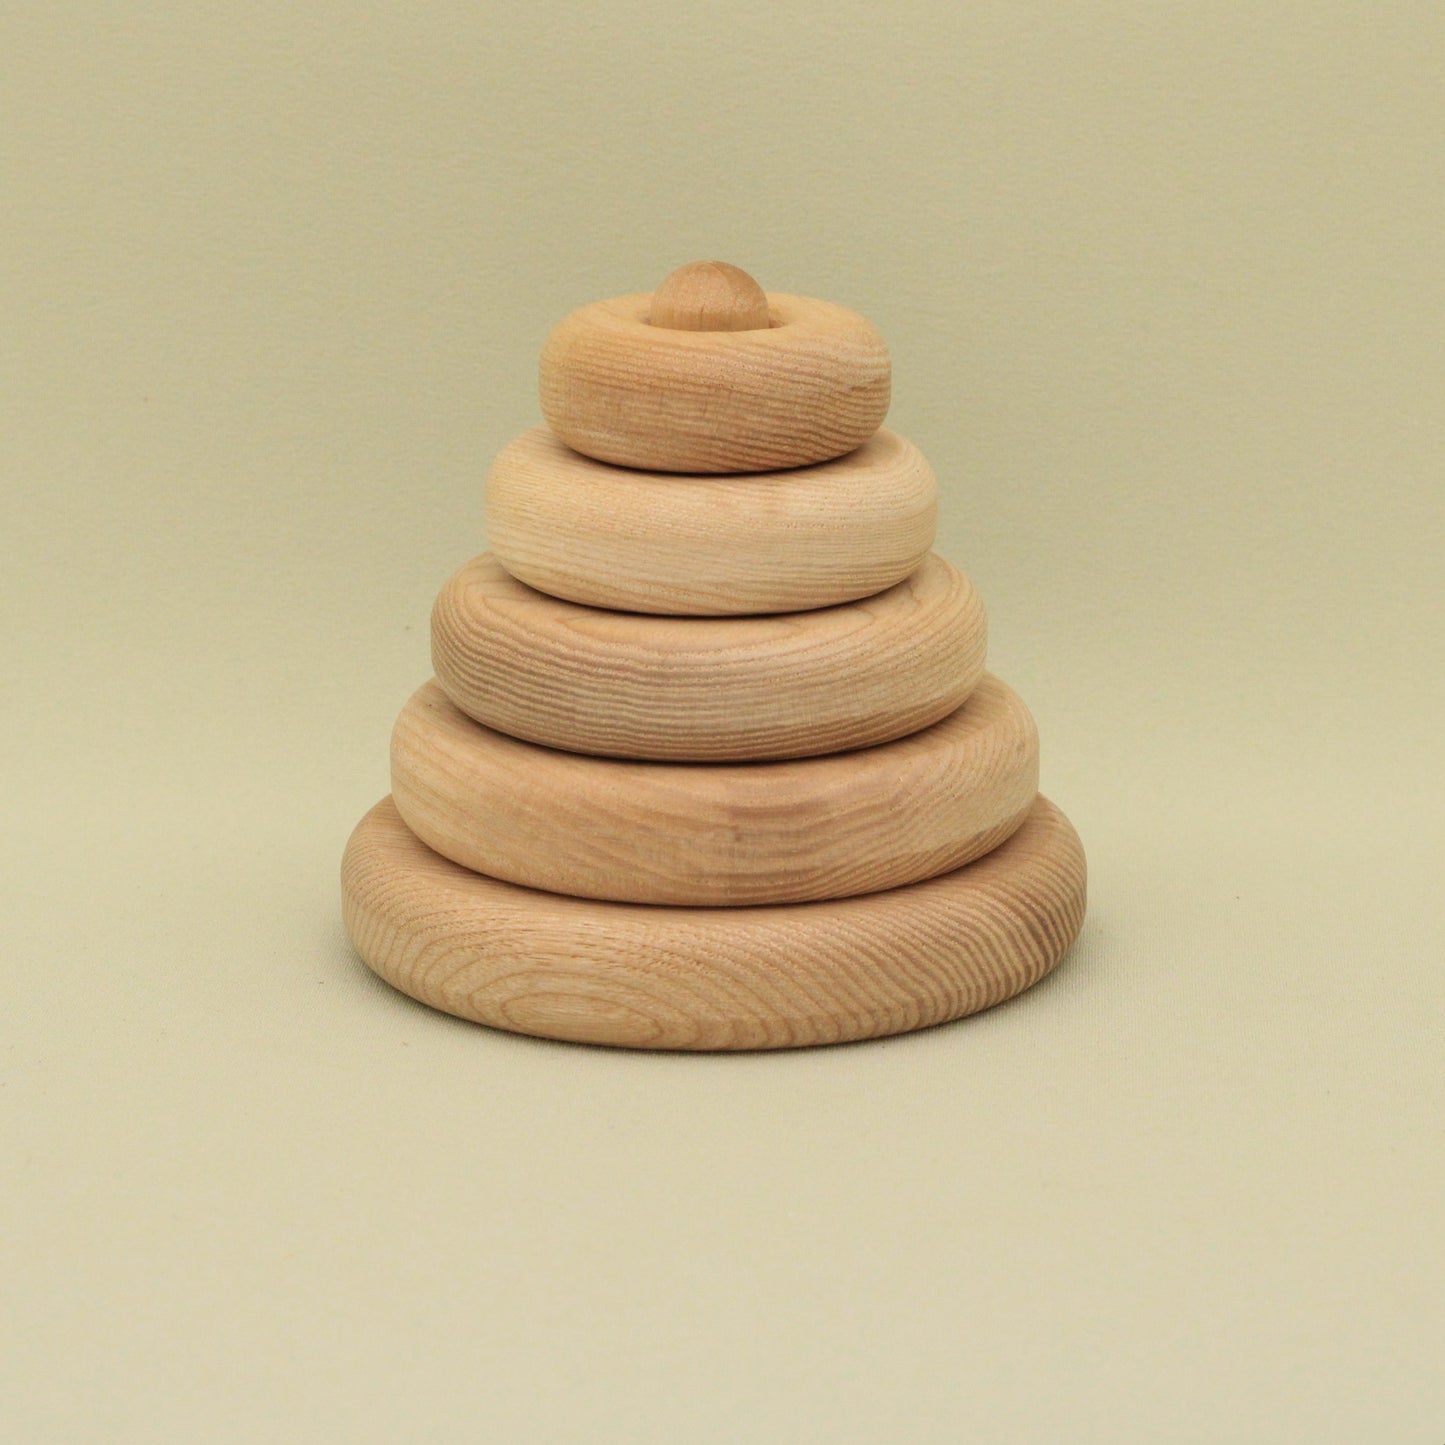 Lotes Toys Natural Rings Wooden Stacking Pyramid PY22